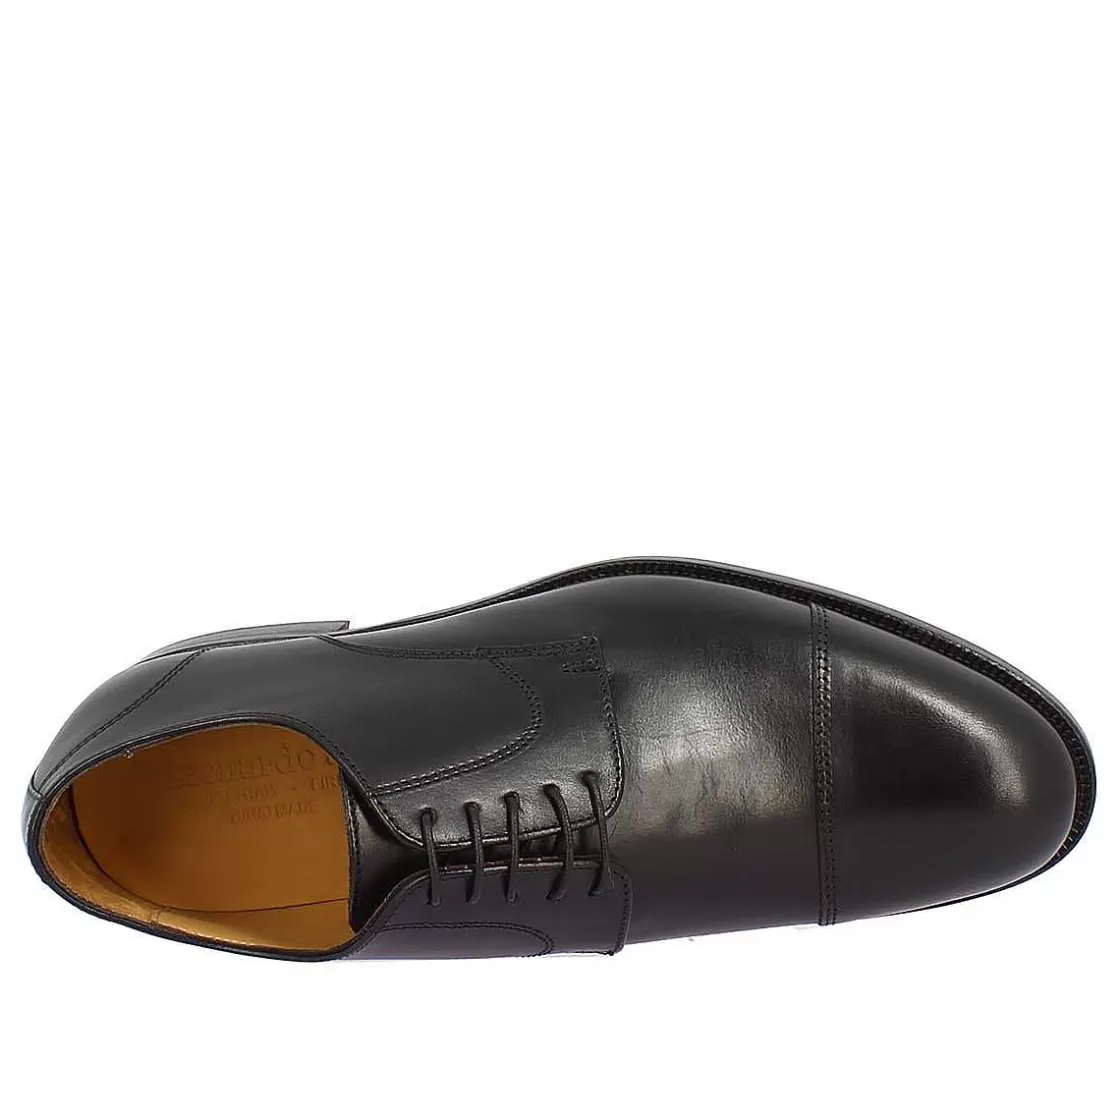 Leonardo Men'S Black Derby Lace-Up Shoe In Genuine Leather With Toe Cap Hot